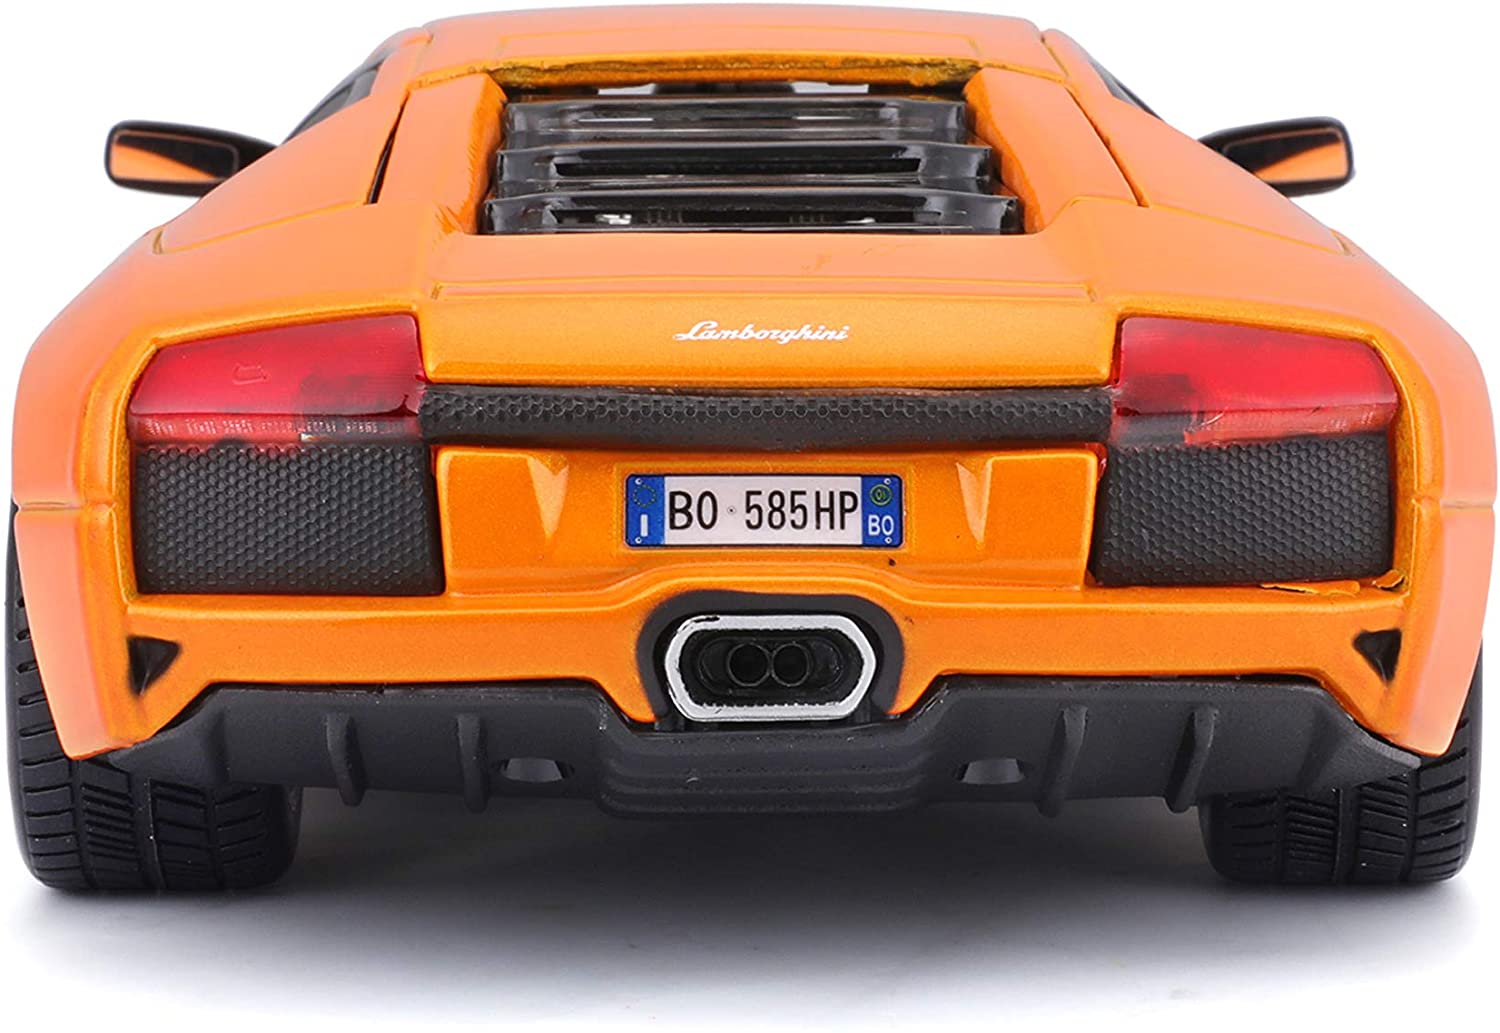 Модель автомобиля Lamborghini Murcielago LP640, 1:24   